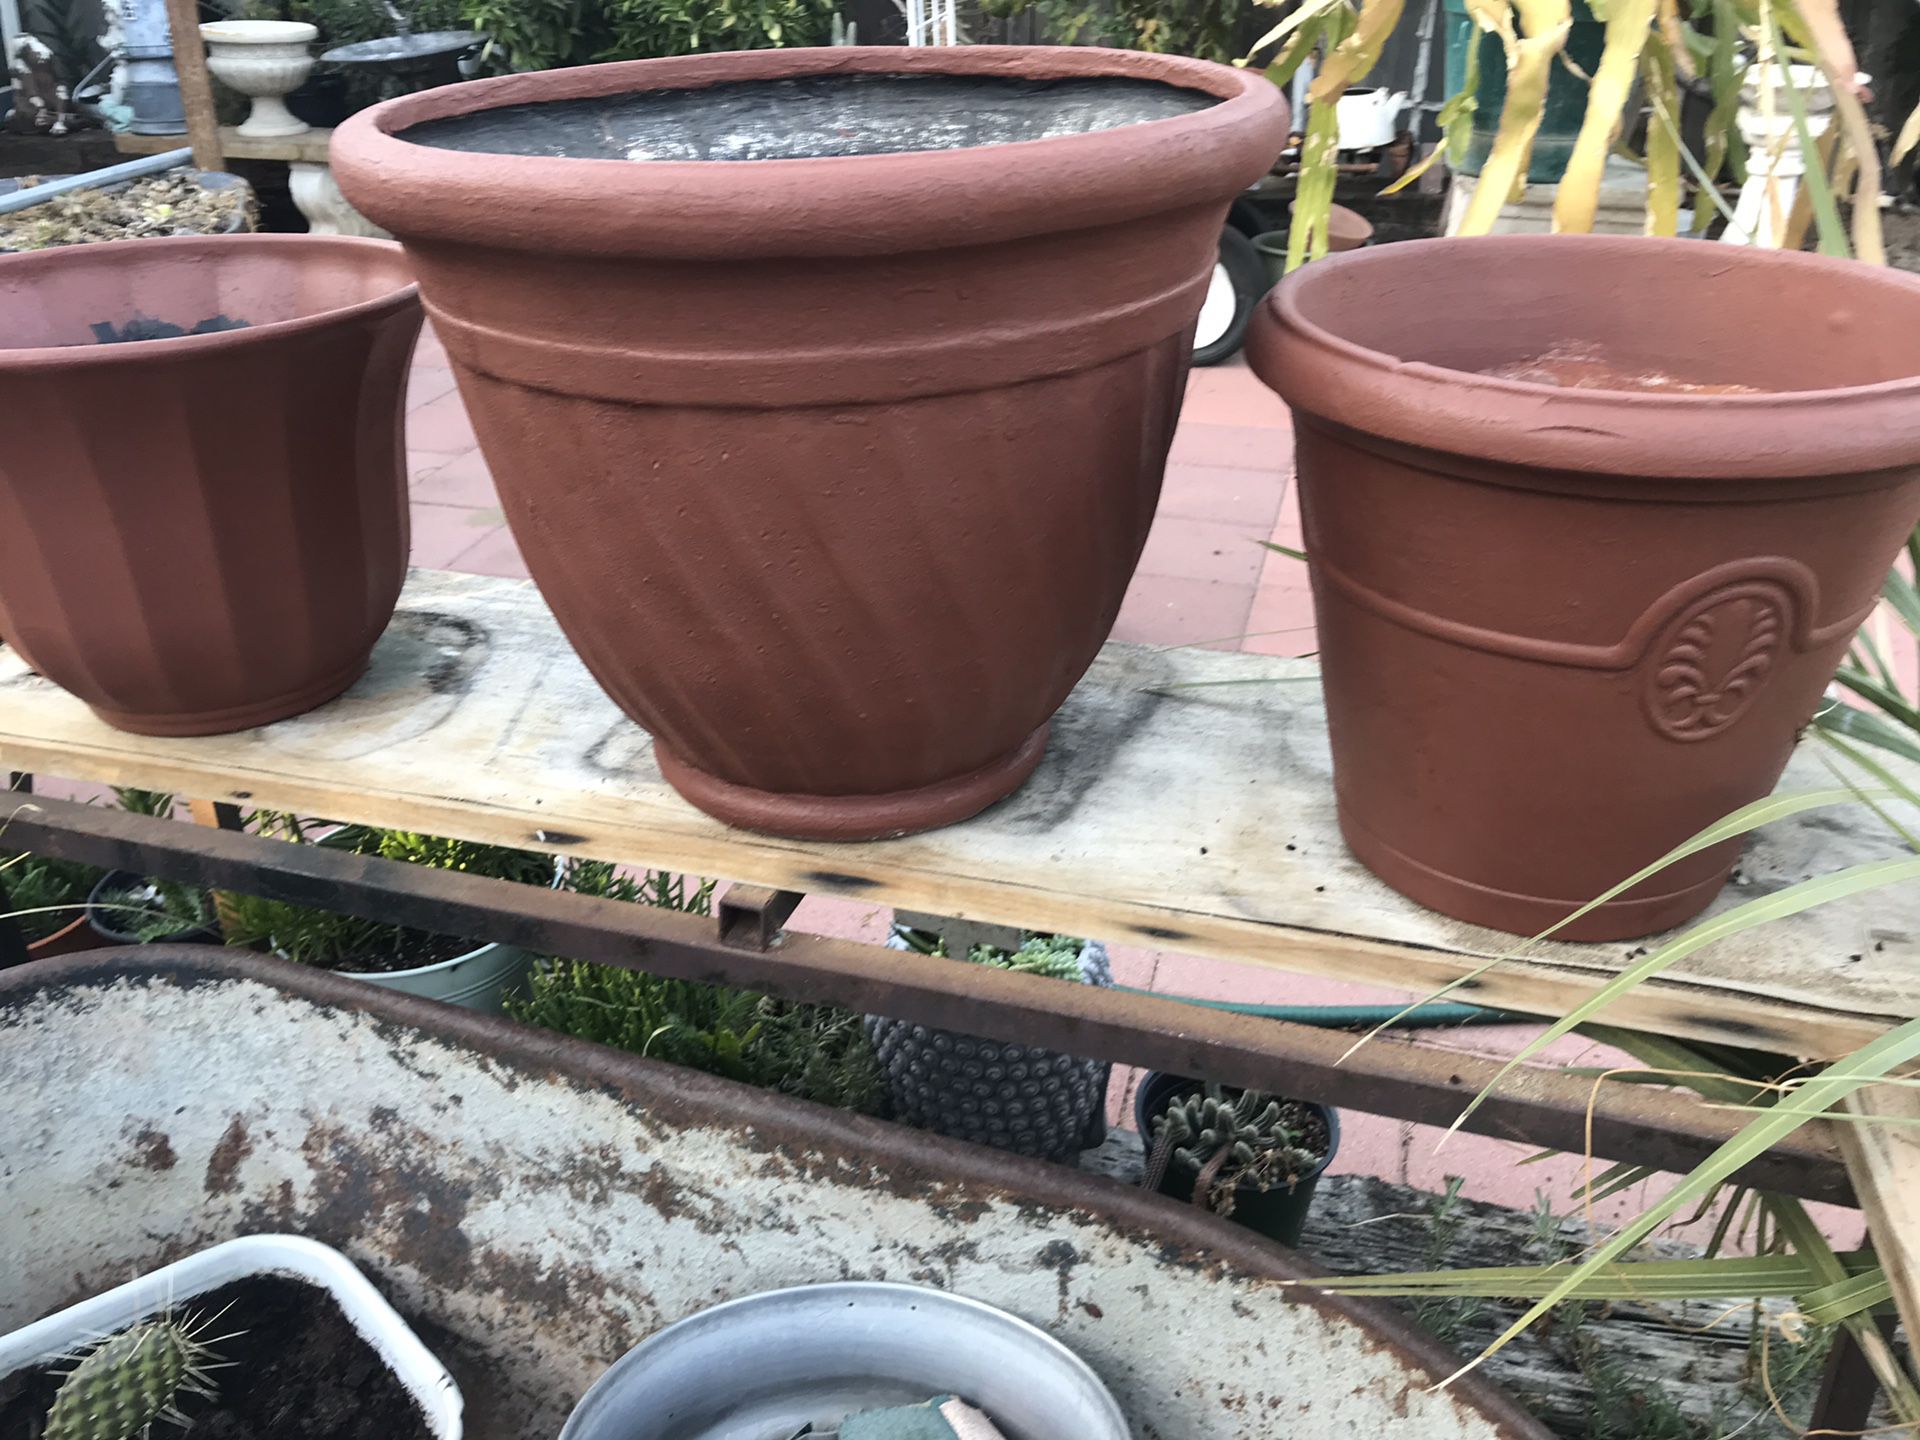 Three pots